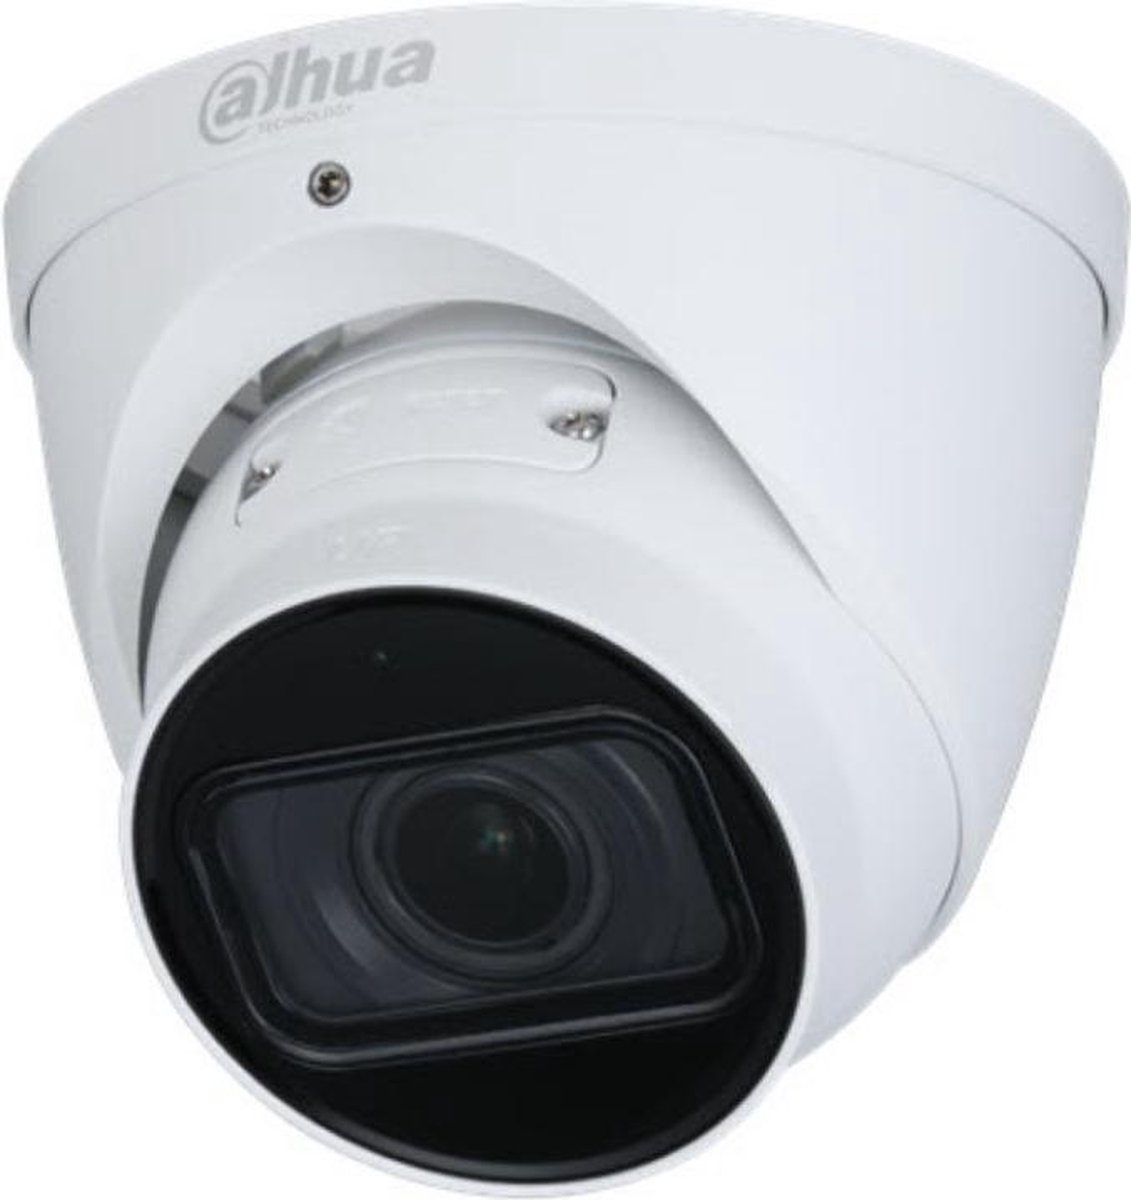 Dahua IPC-HDW3241T-ZAS Full HD 2MP Starlight Lite AI buiten eyeball camera met 40m IR, varifocale lens, microfoon, PoE, microSD - Beveiligingscamera IP camera bewakingscamera camerabewaking veiligheidscamera beveiliging netwerk camera webcam